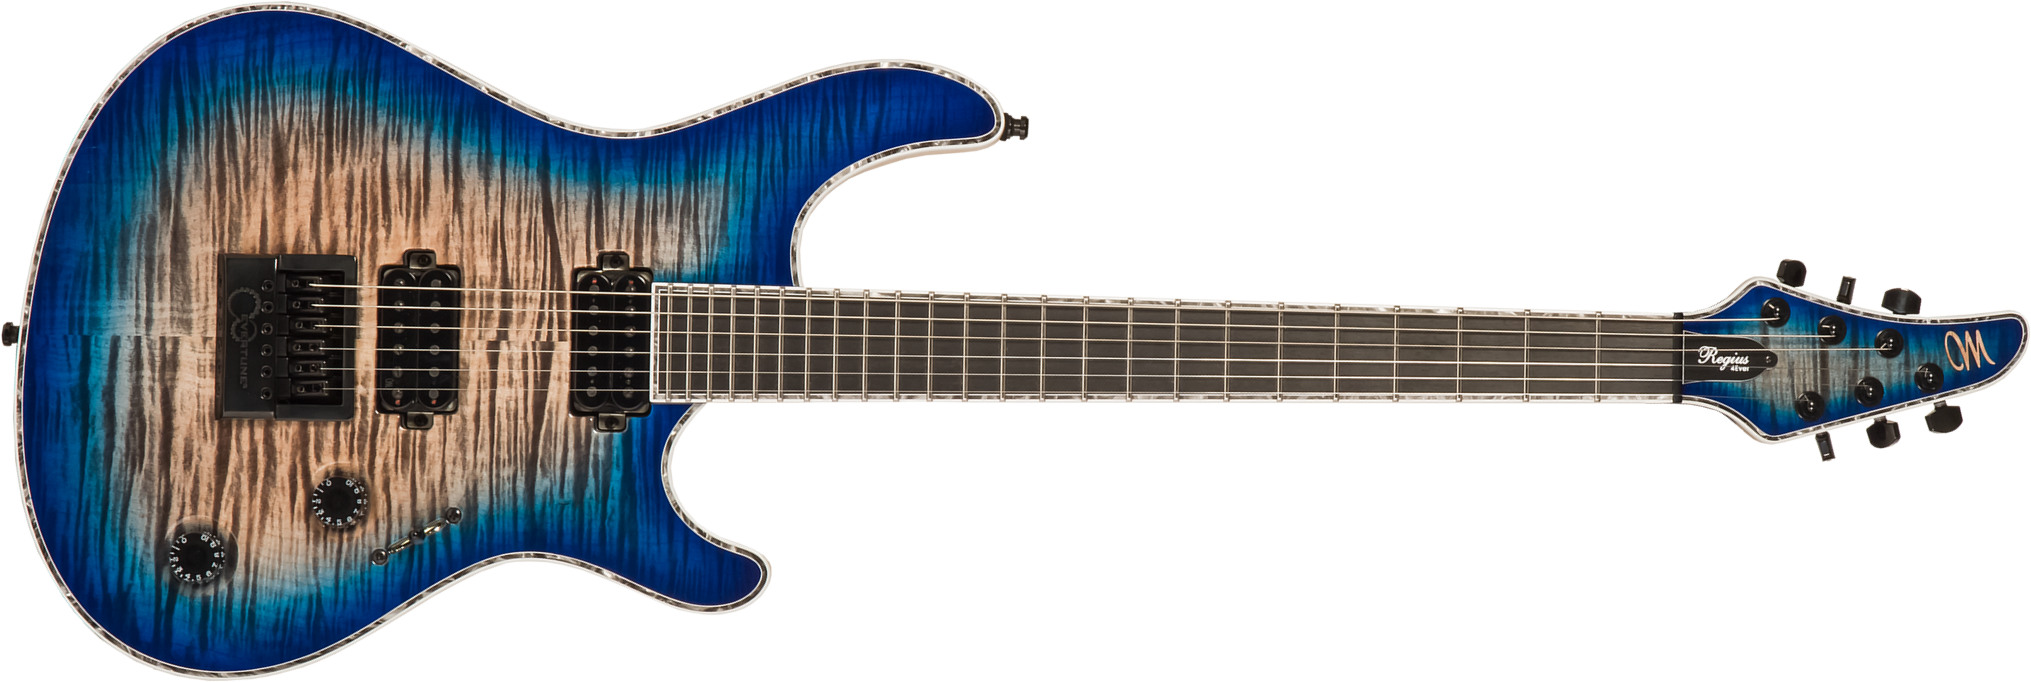 Mayones Guitars Regius 4ever 6 2h Ht Eb #rp2309275 - Jeans Black 3-tone Blue Burst Gloss - Metal electric guitar - Main picture